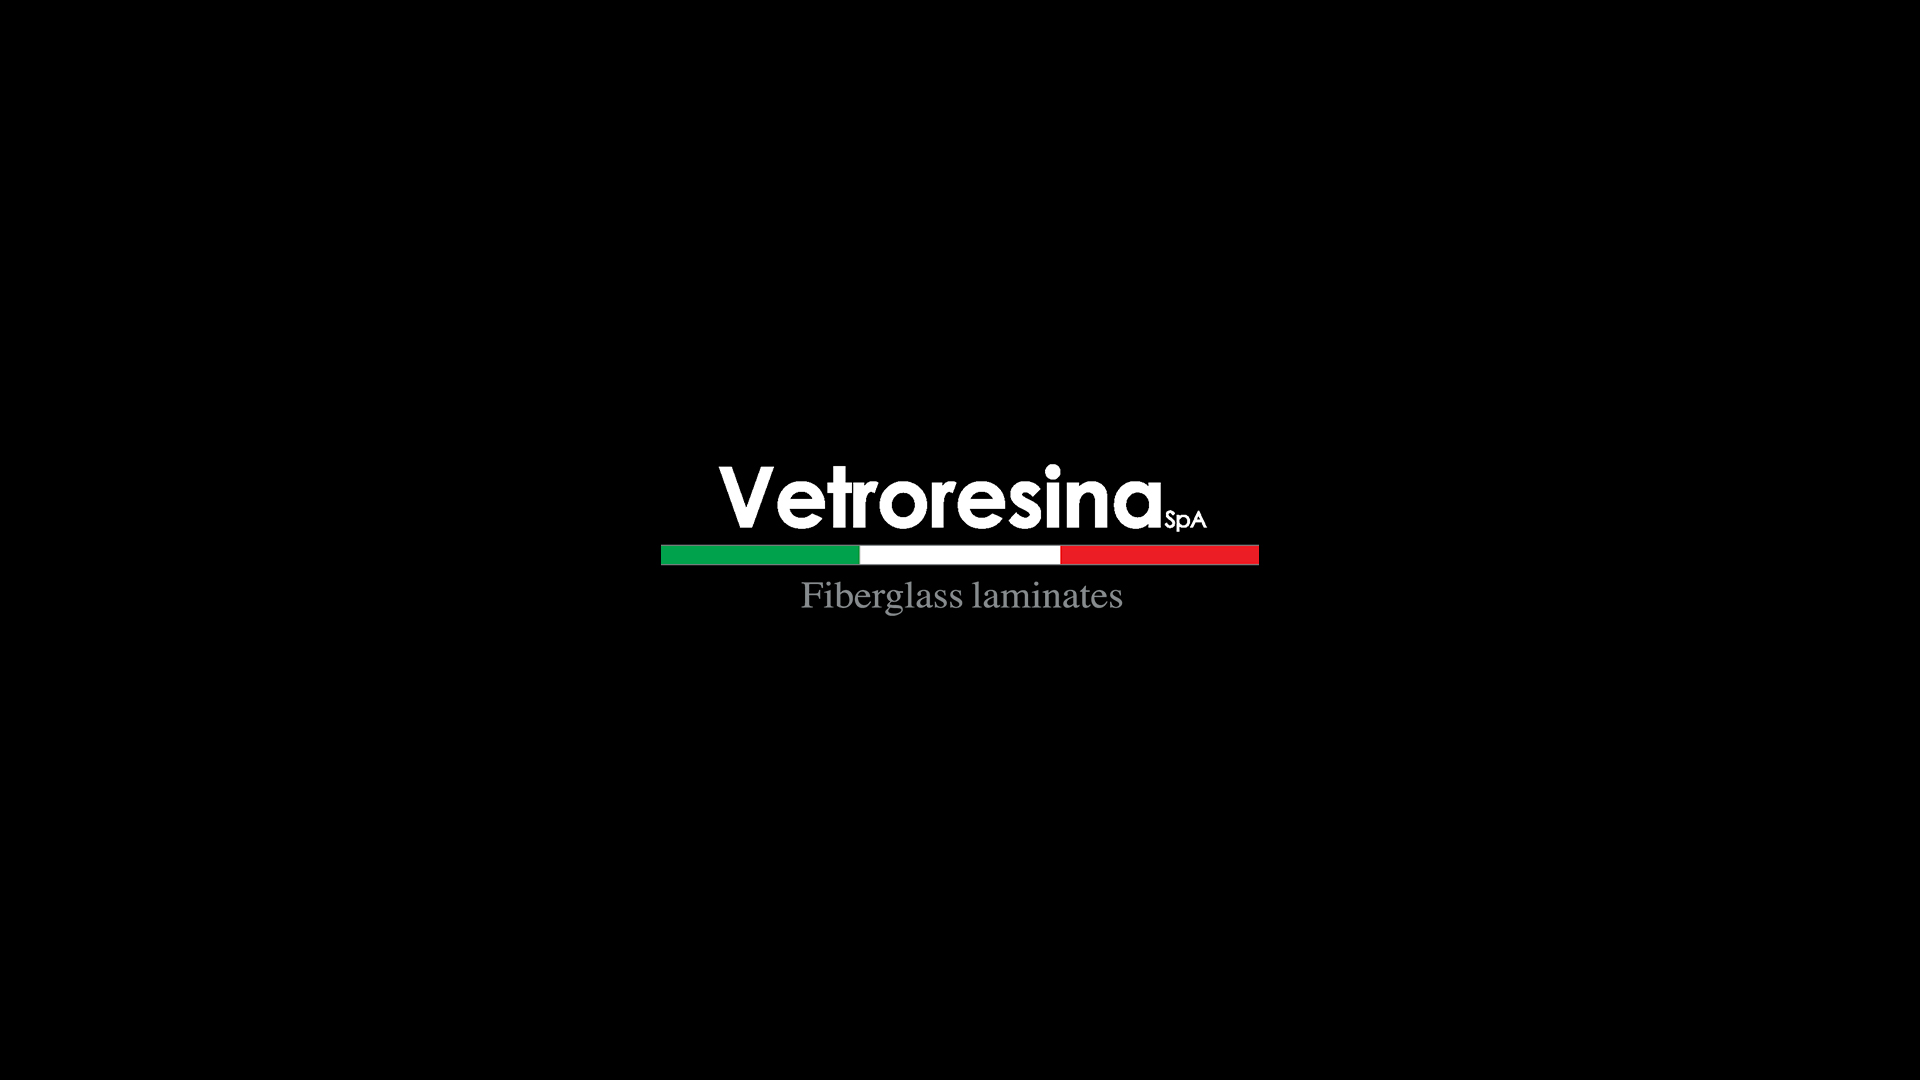 (c) Vetroresina.com